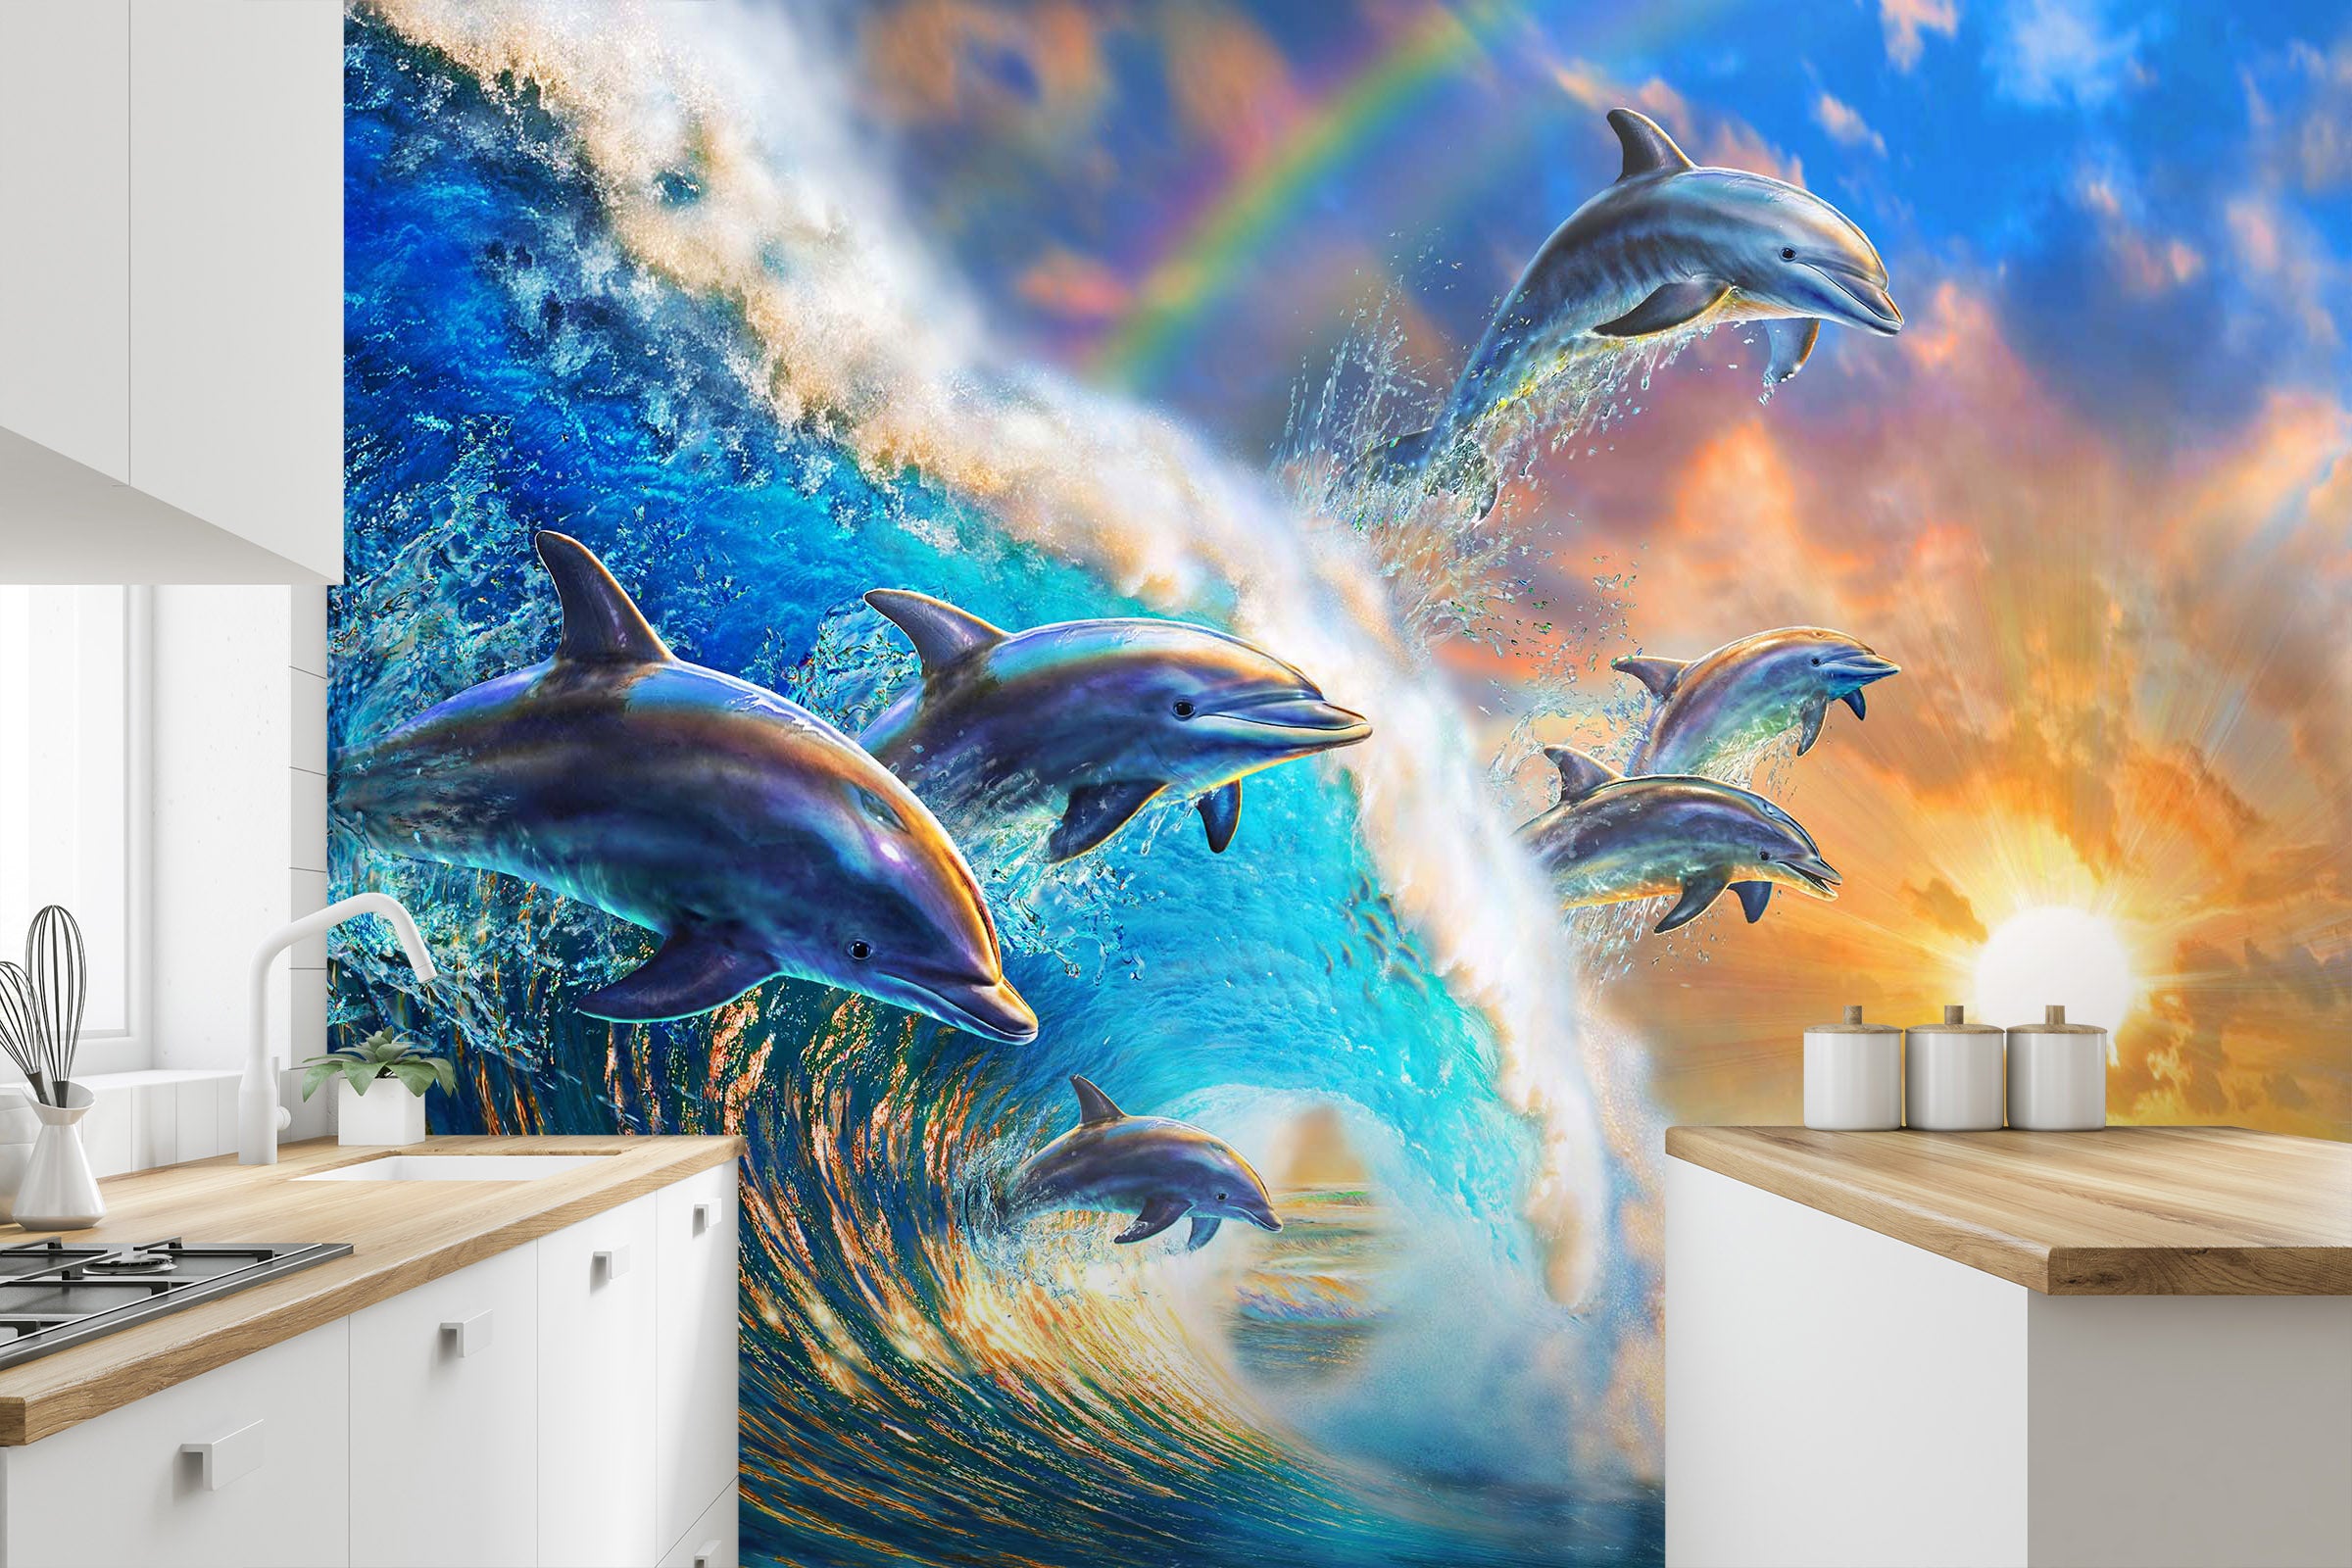 3D Dolphin Wave 1416 Adrian Chesterman Wall Mural Wall Murals